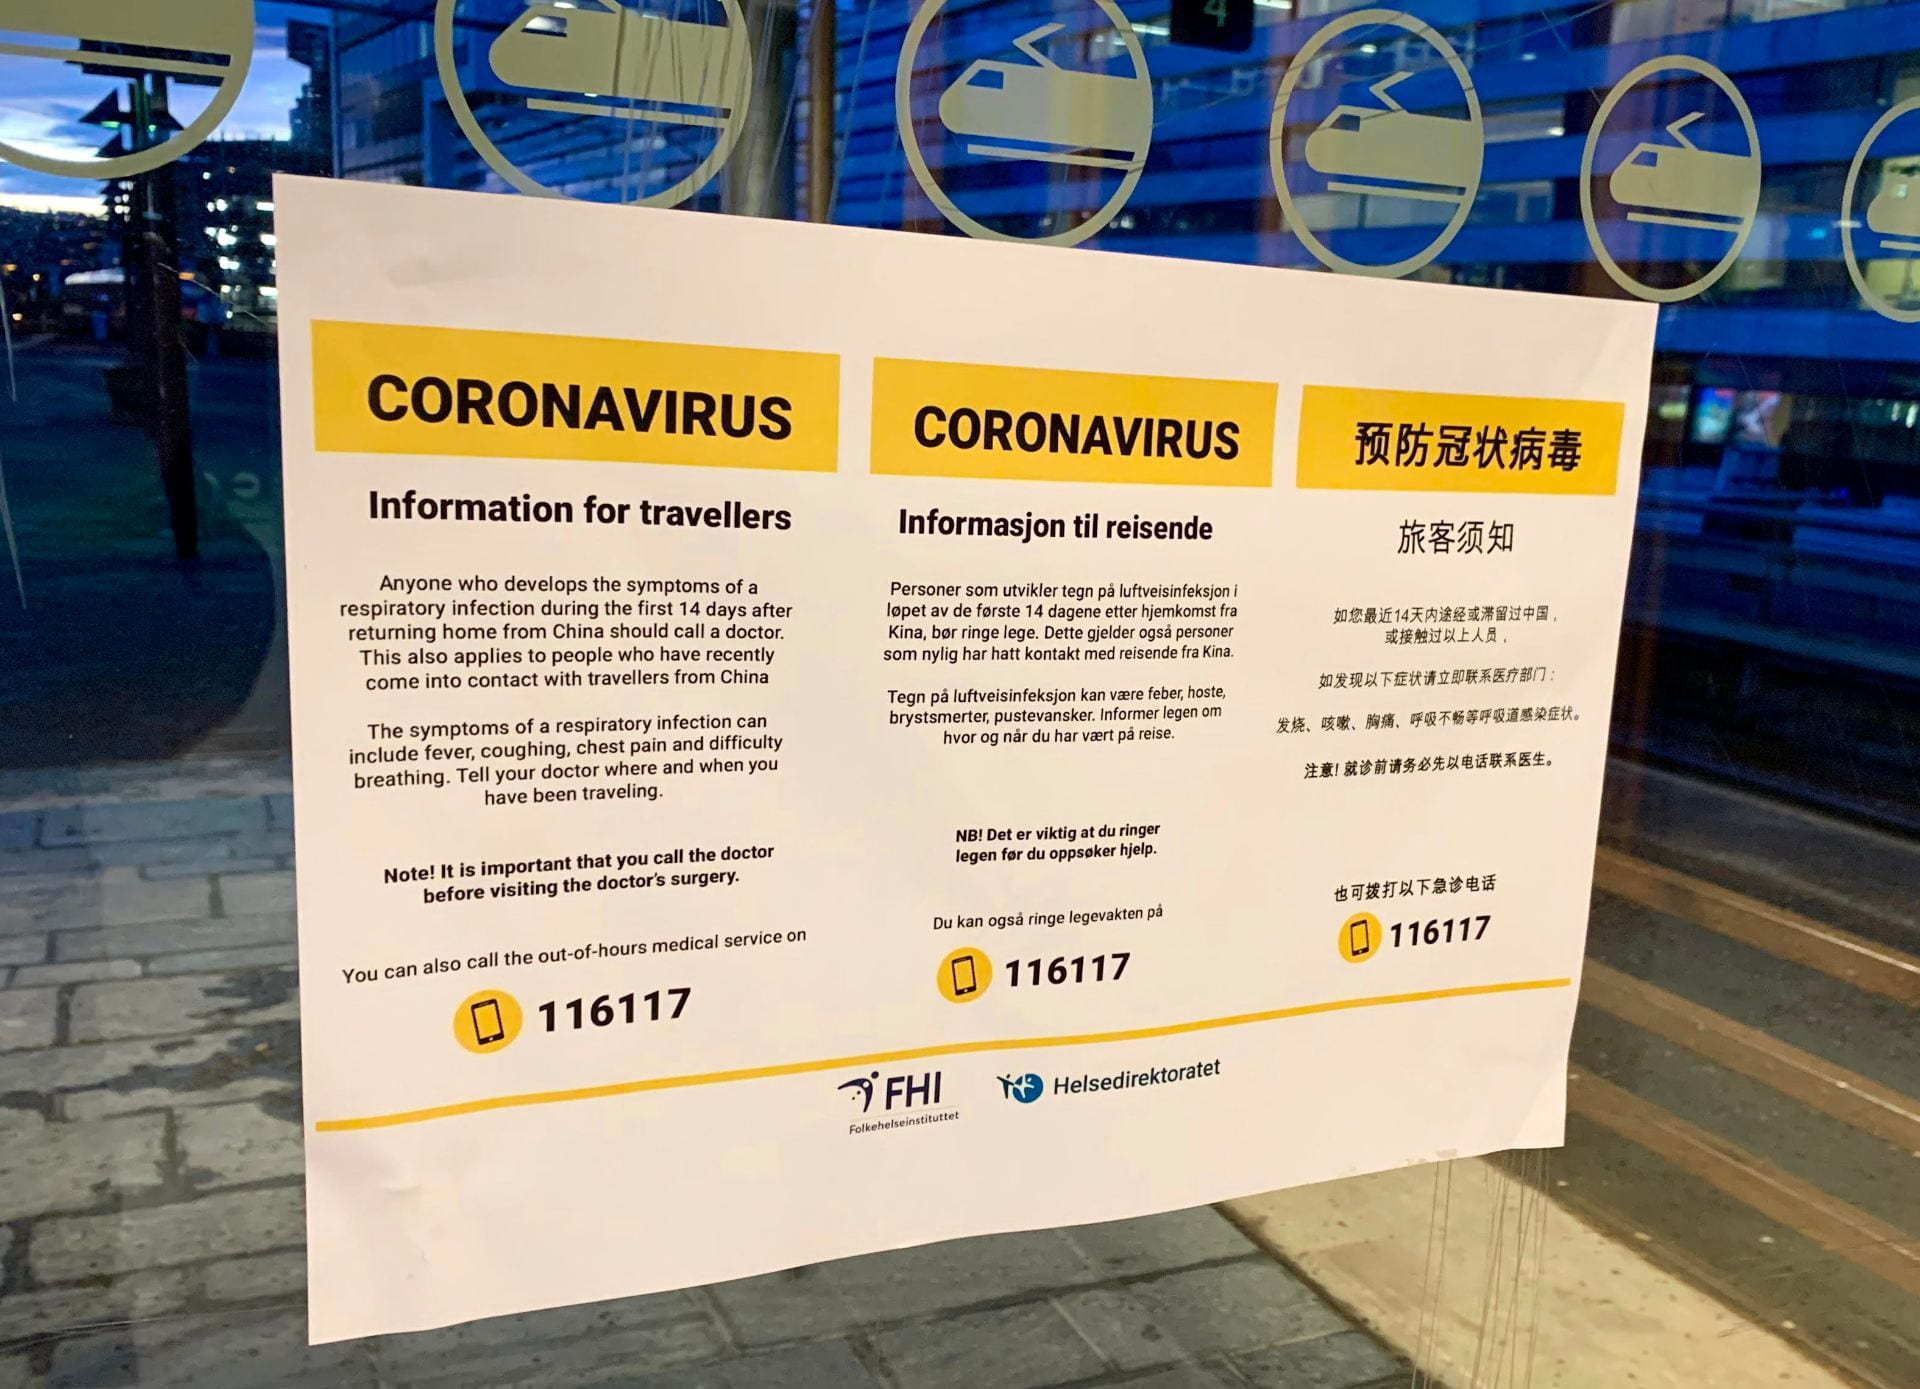 informational poster on coronavirus and travel